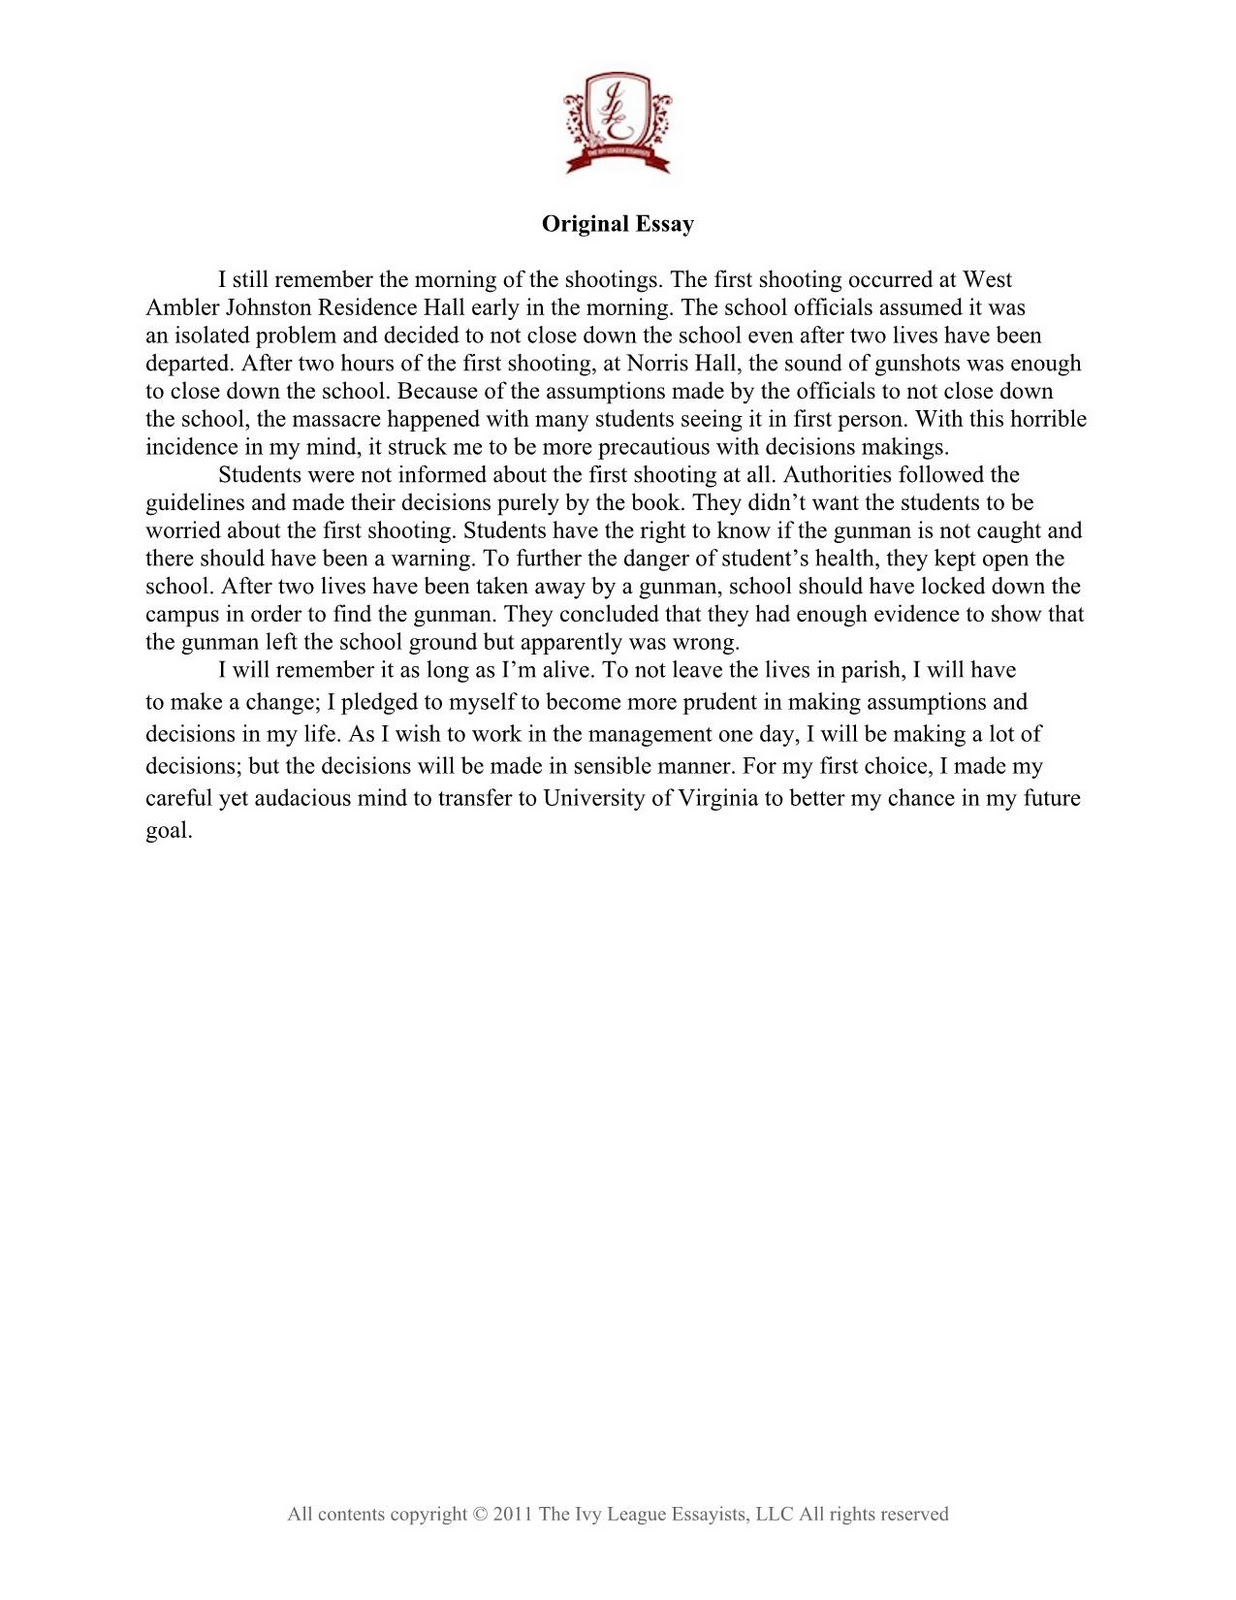 Virginia tech college essay prompt 2013